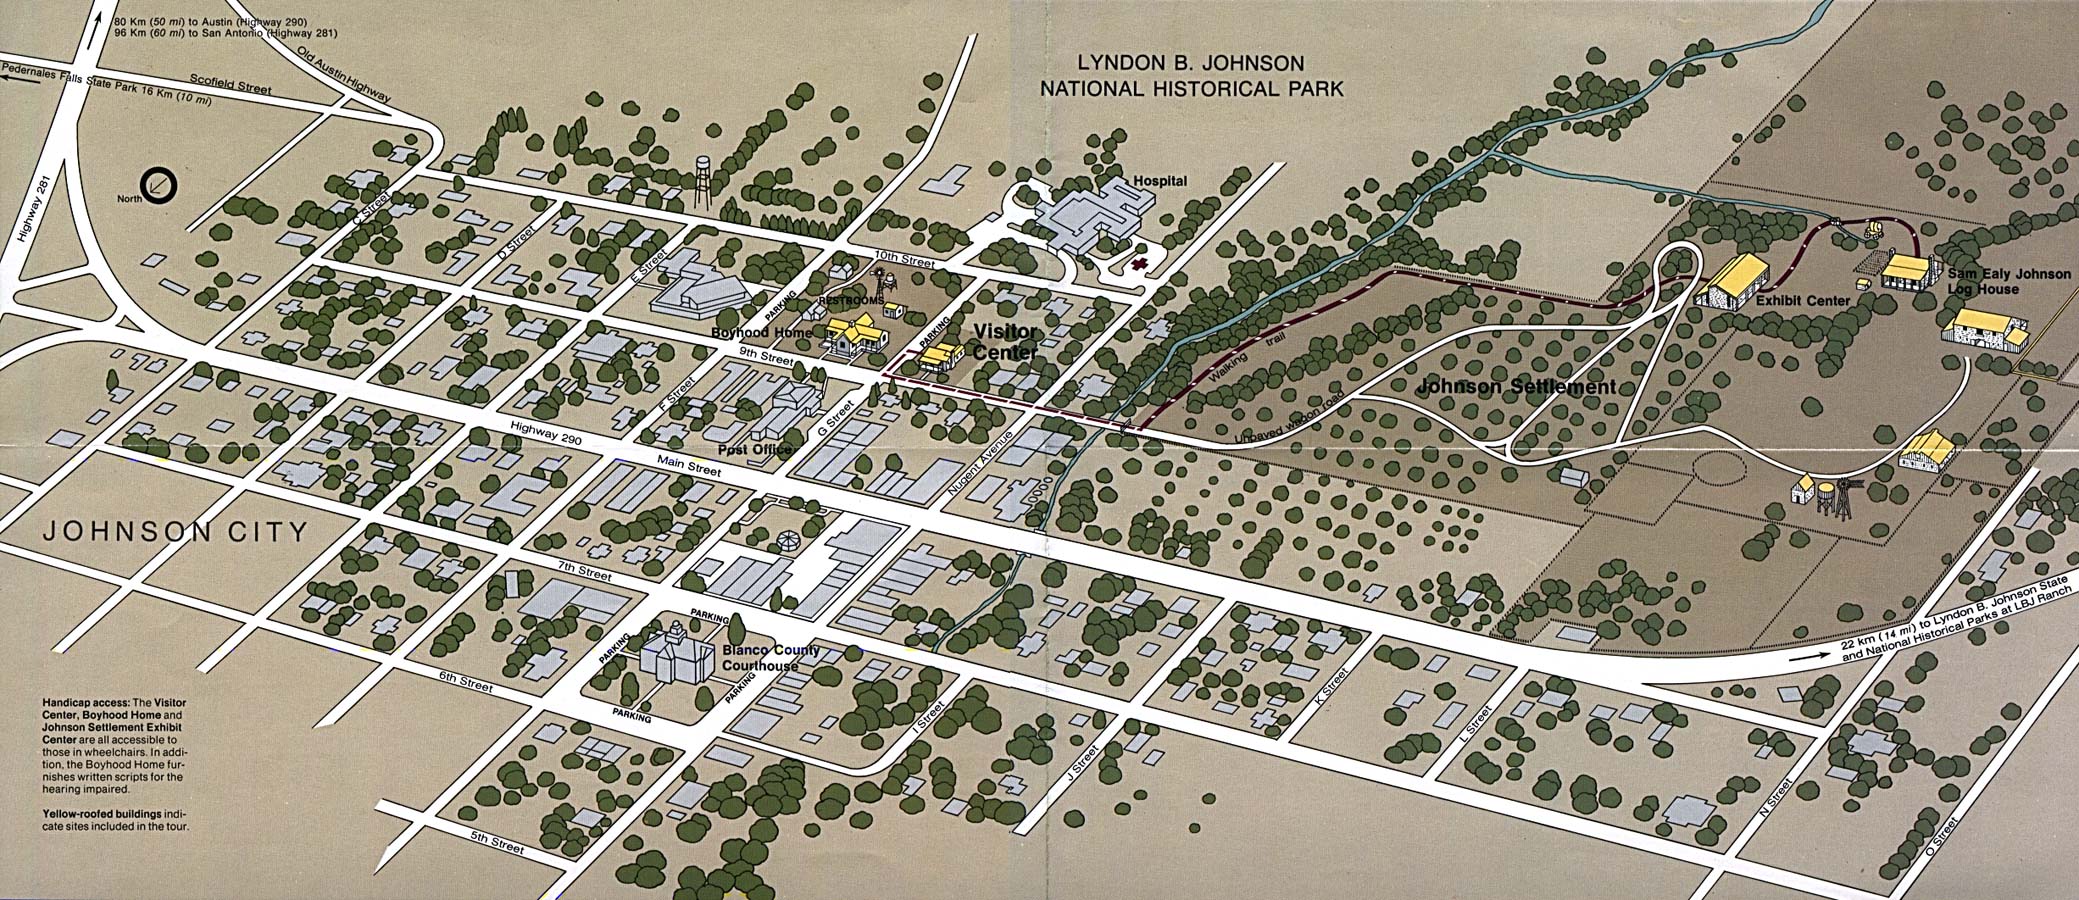 Mapa del Parque Nacional Histórico Lyndon B. Johnson, Johnson City, Estados Unidos